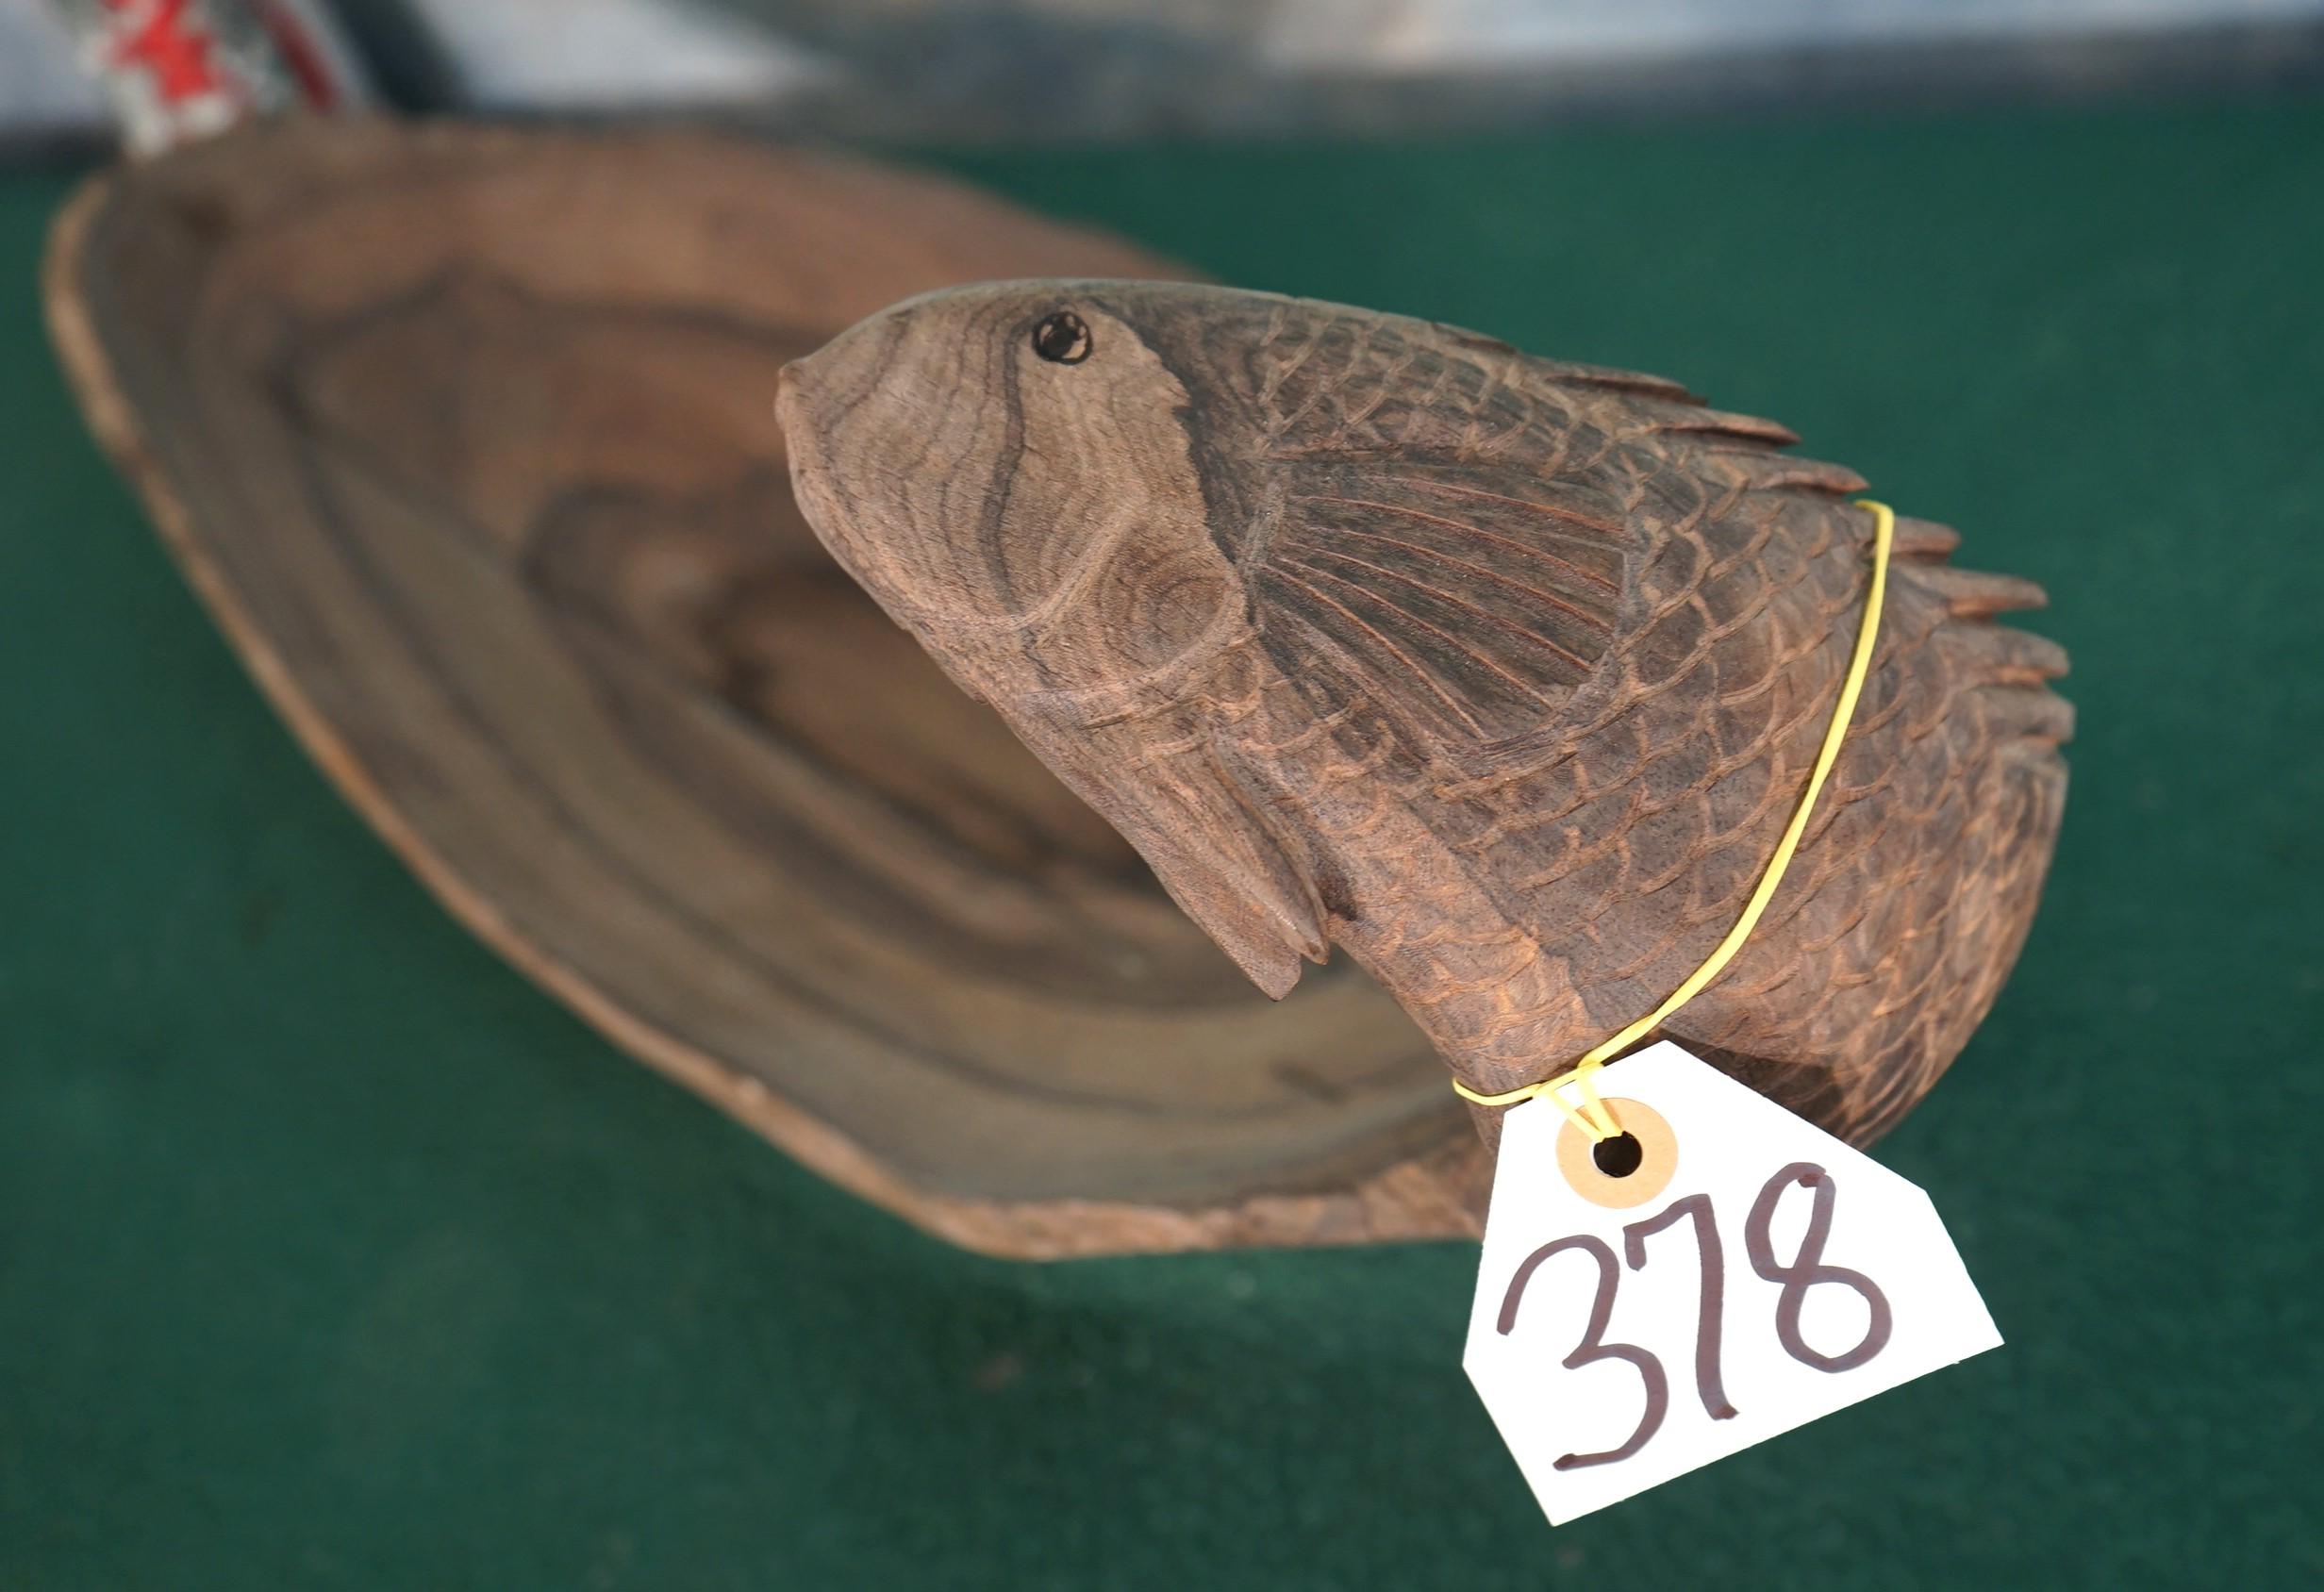 Carved Wooden Fish Platter From Belize